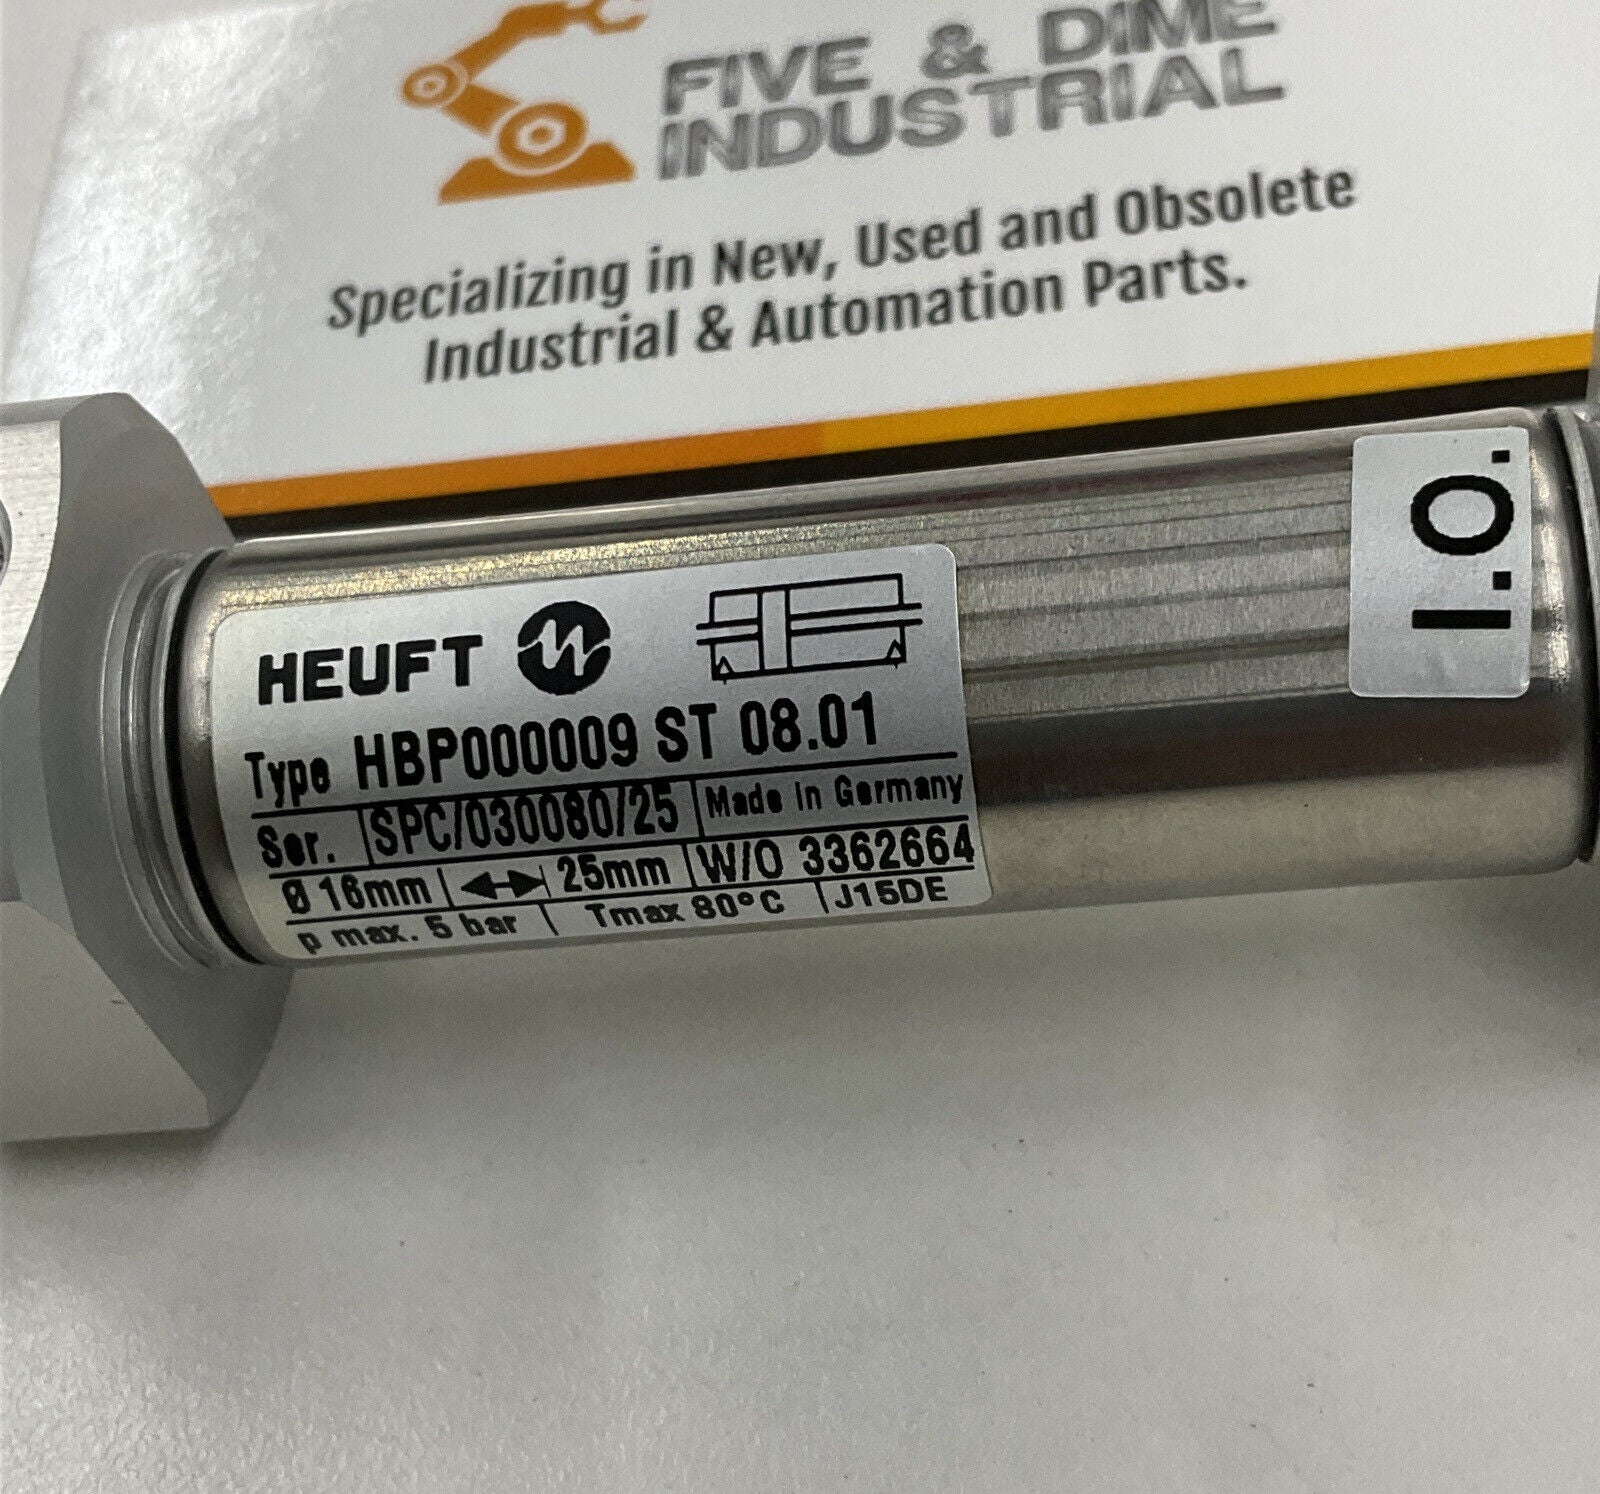 Heuft  HBP000009 Pneumatic Cylinder 16mm-25mm  (RE229)